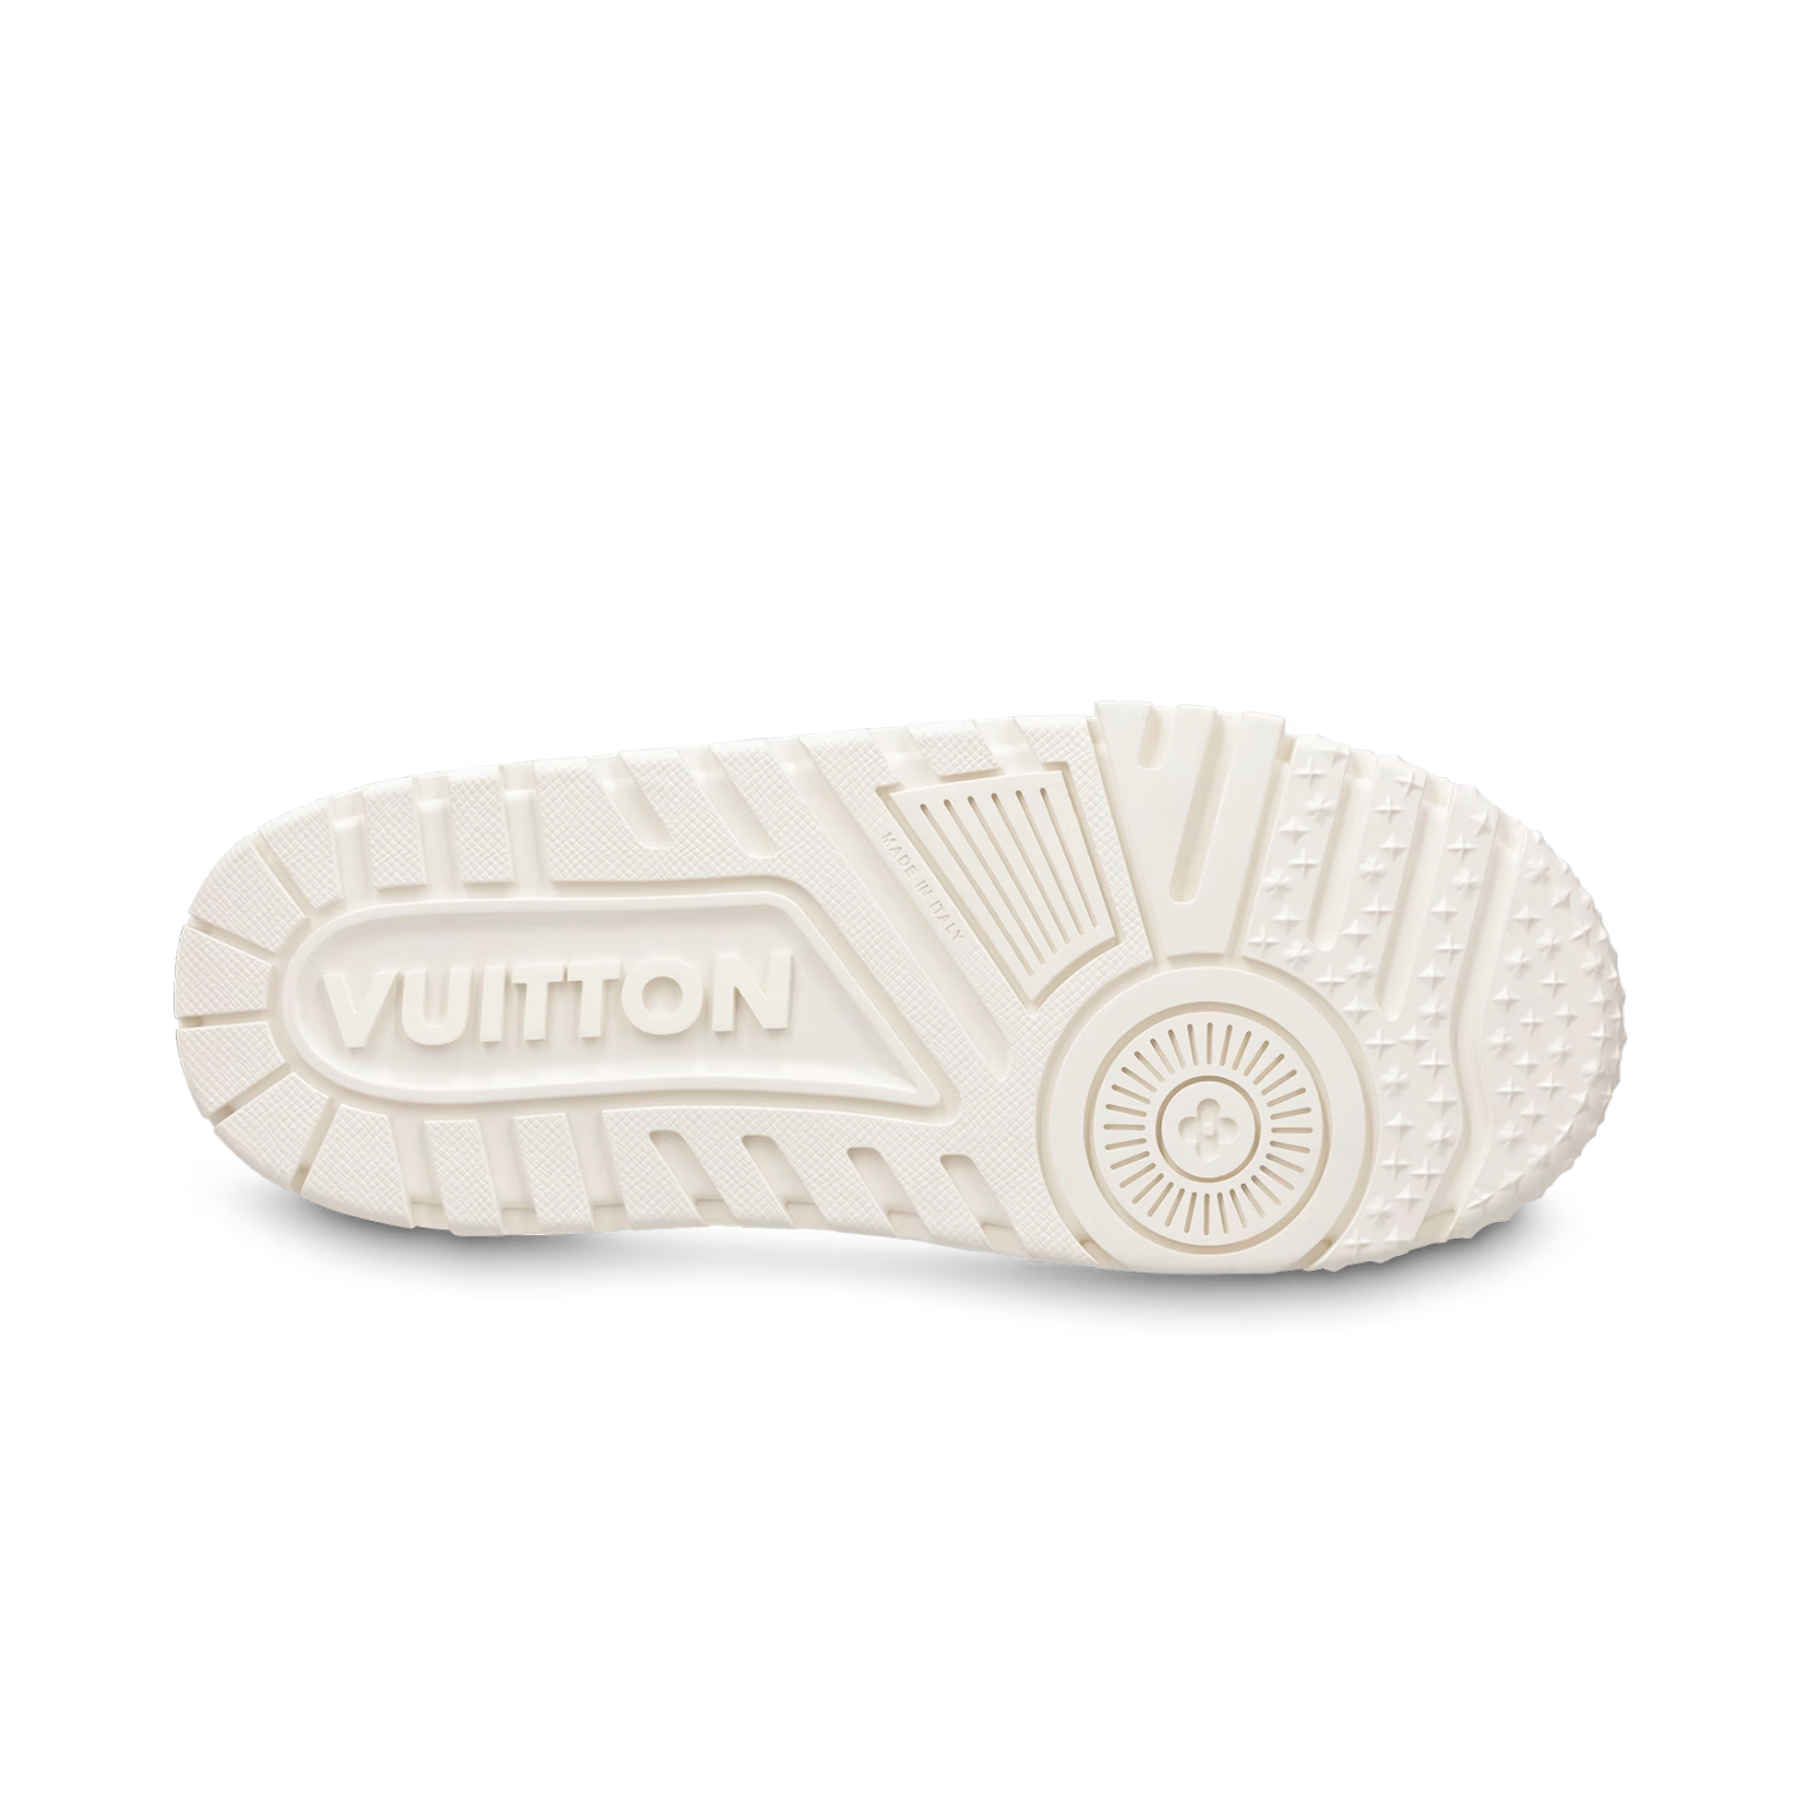 Louis Vuitton White/Grey LV Trainer Sneakers EU 37.5